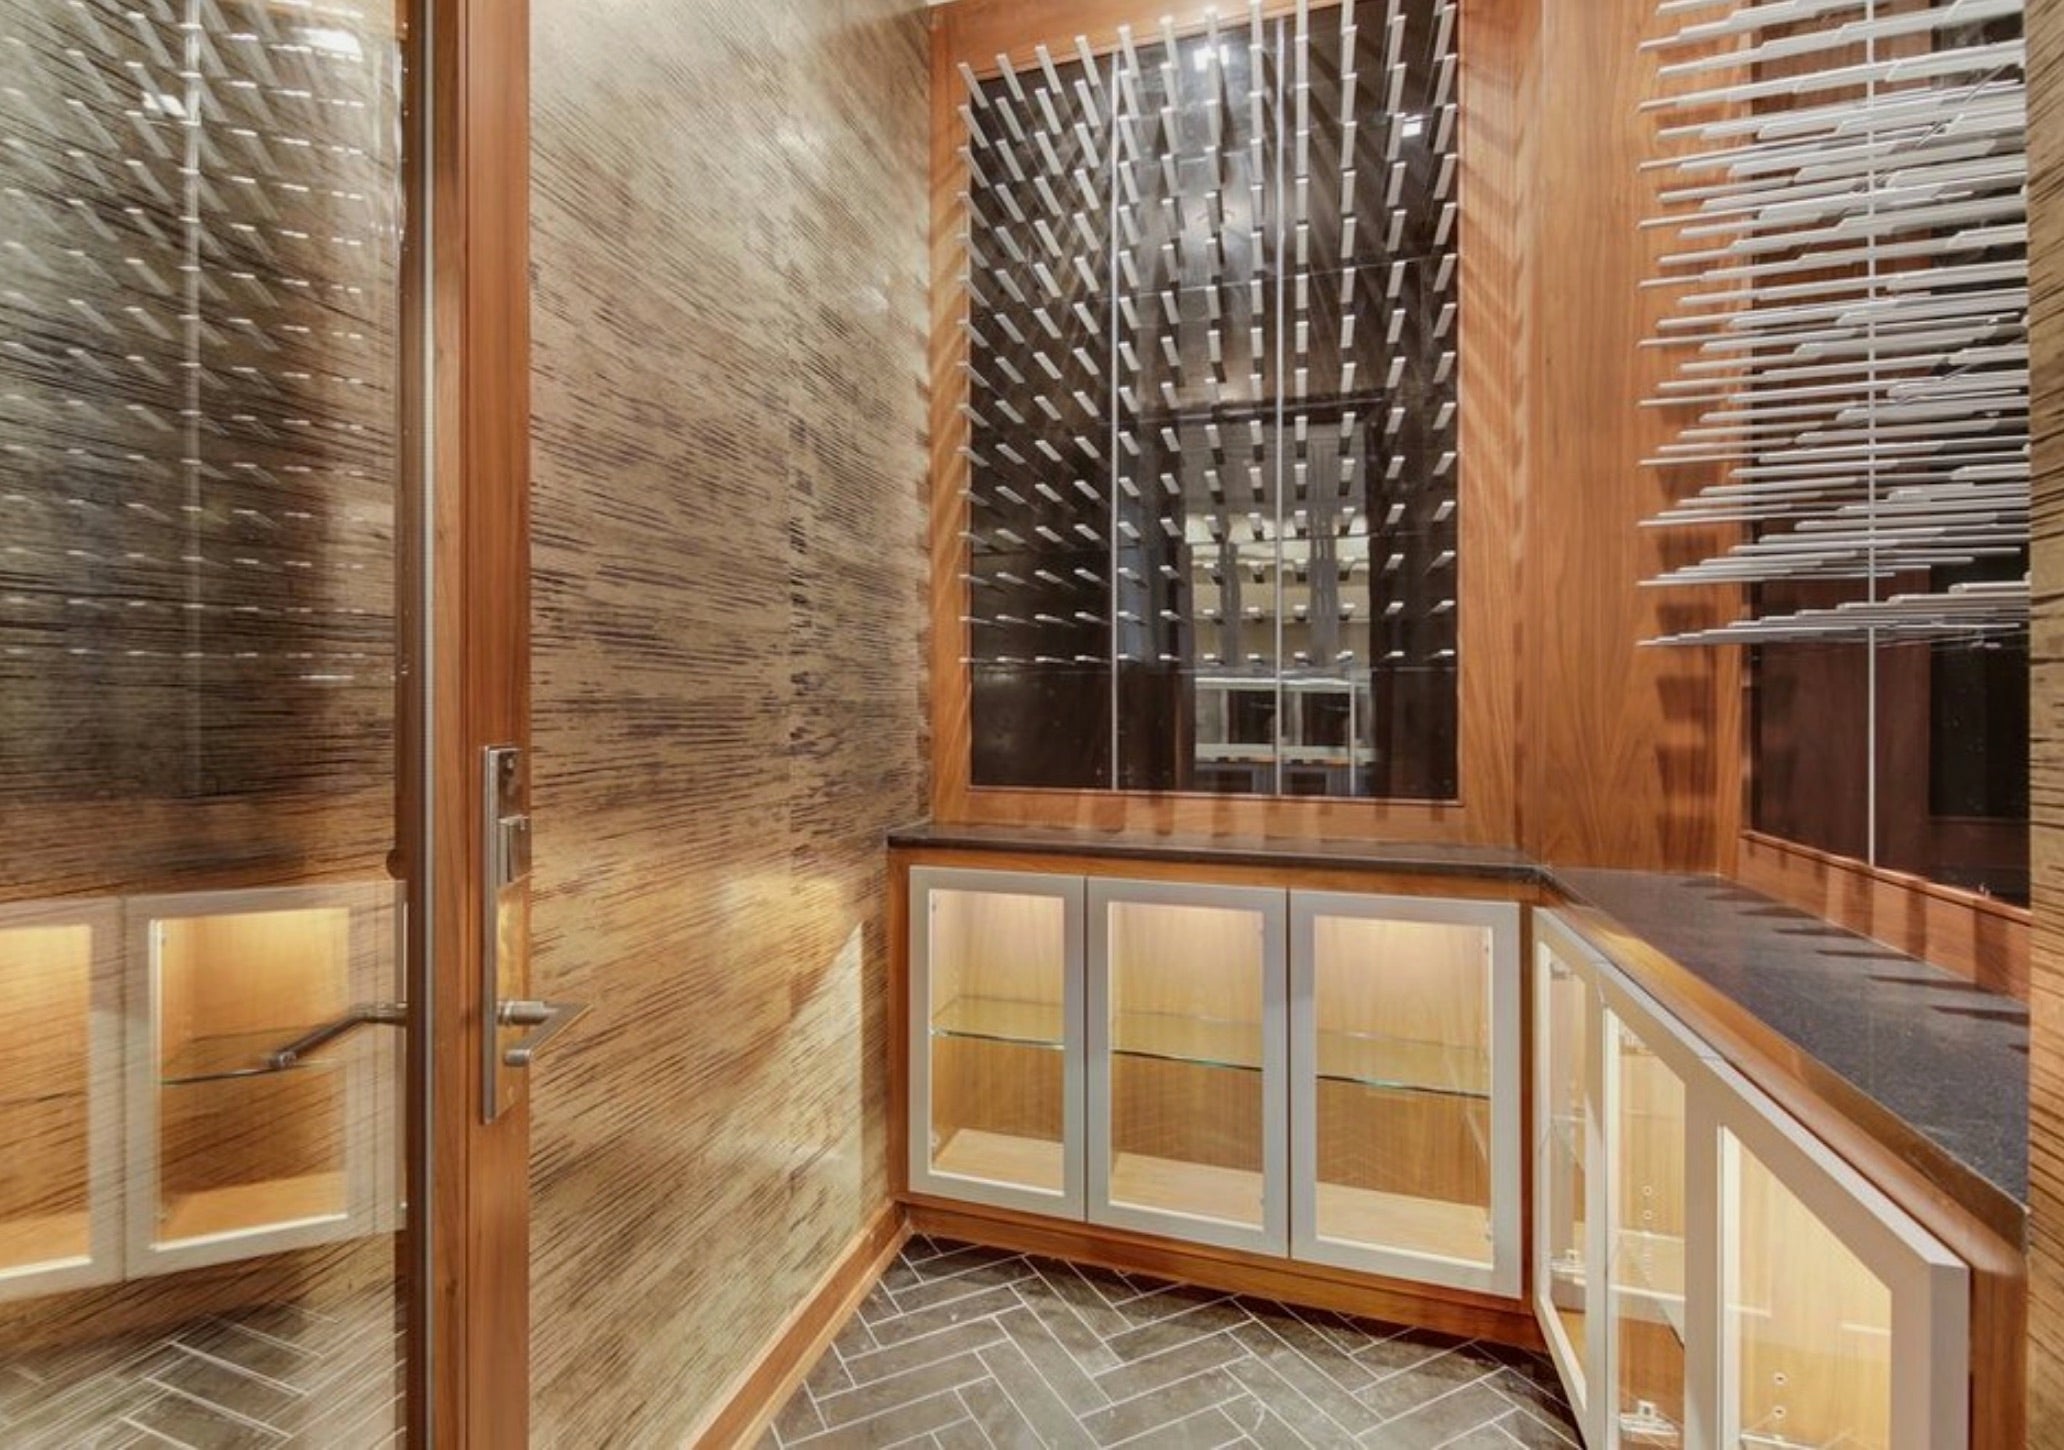 transitional wine cellar design with peg wine racks